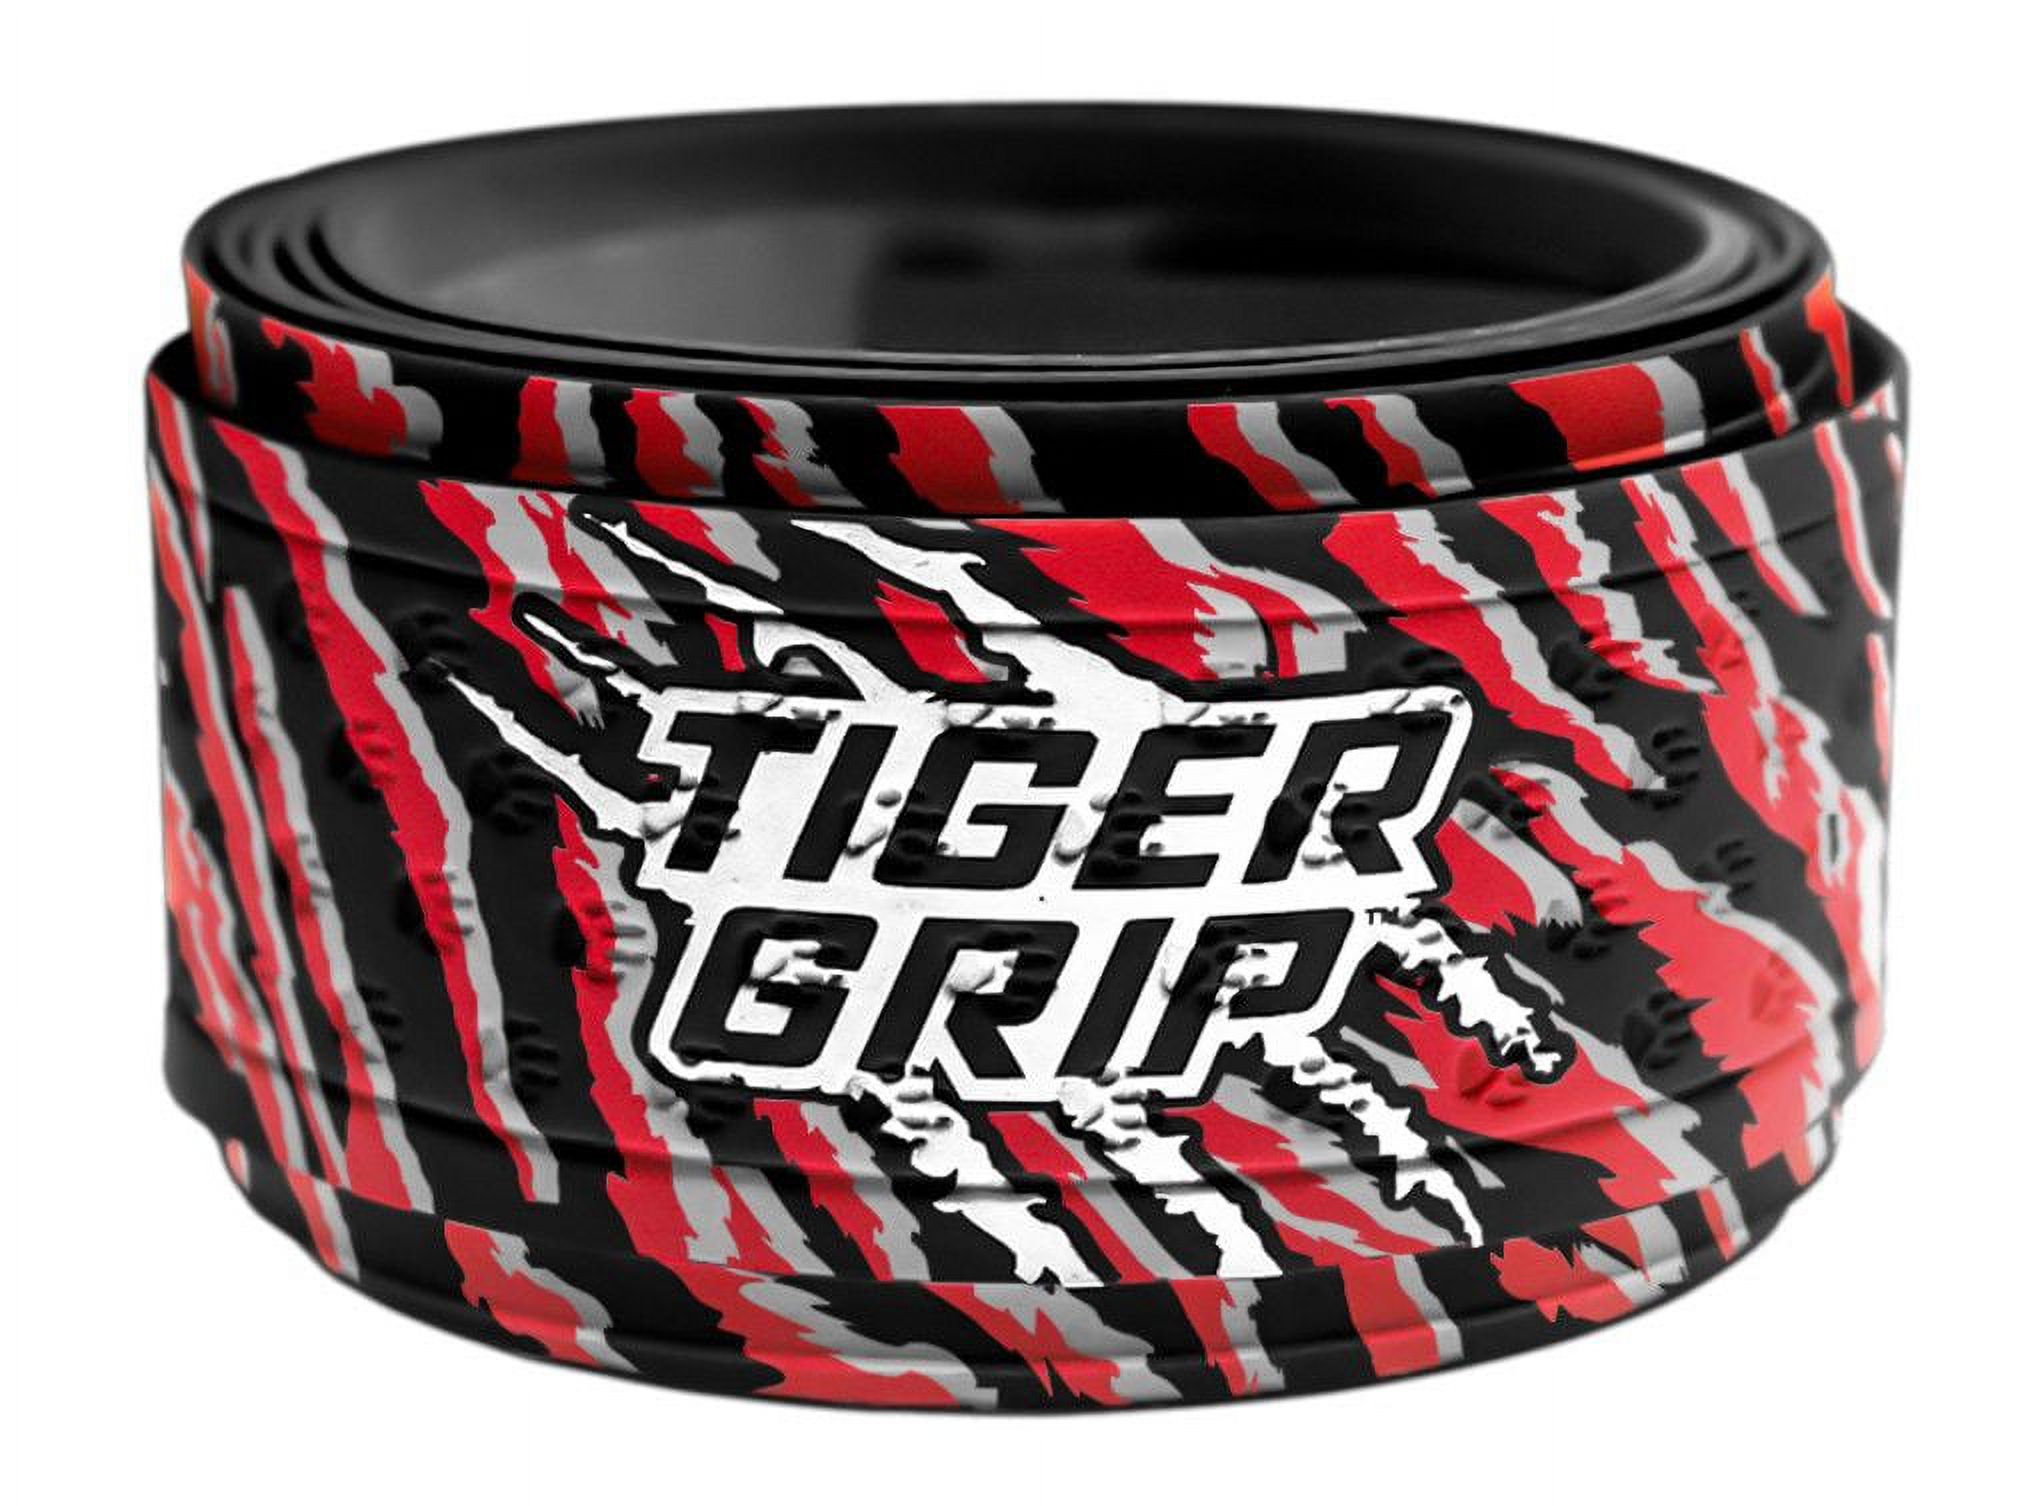 Tiger Grip Bat Wrap/Bat Tape for Baseball and Softball - 0.5mm